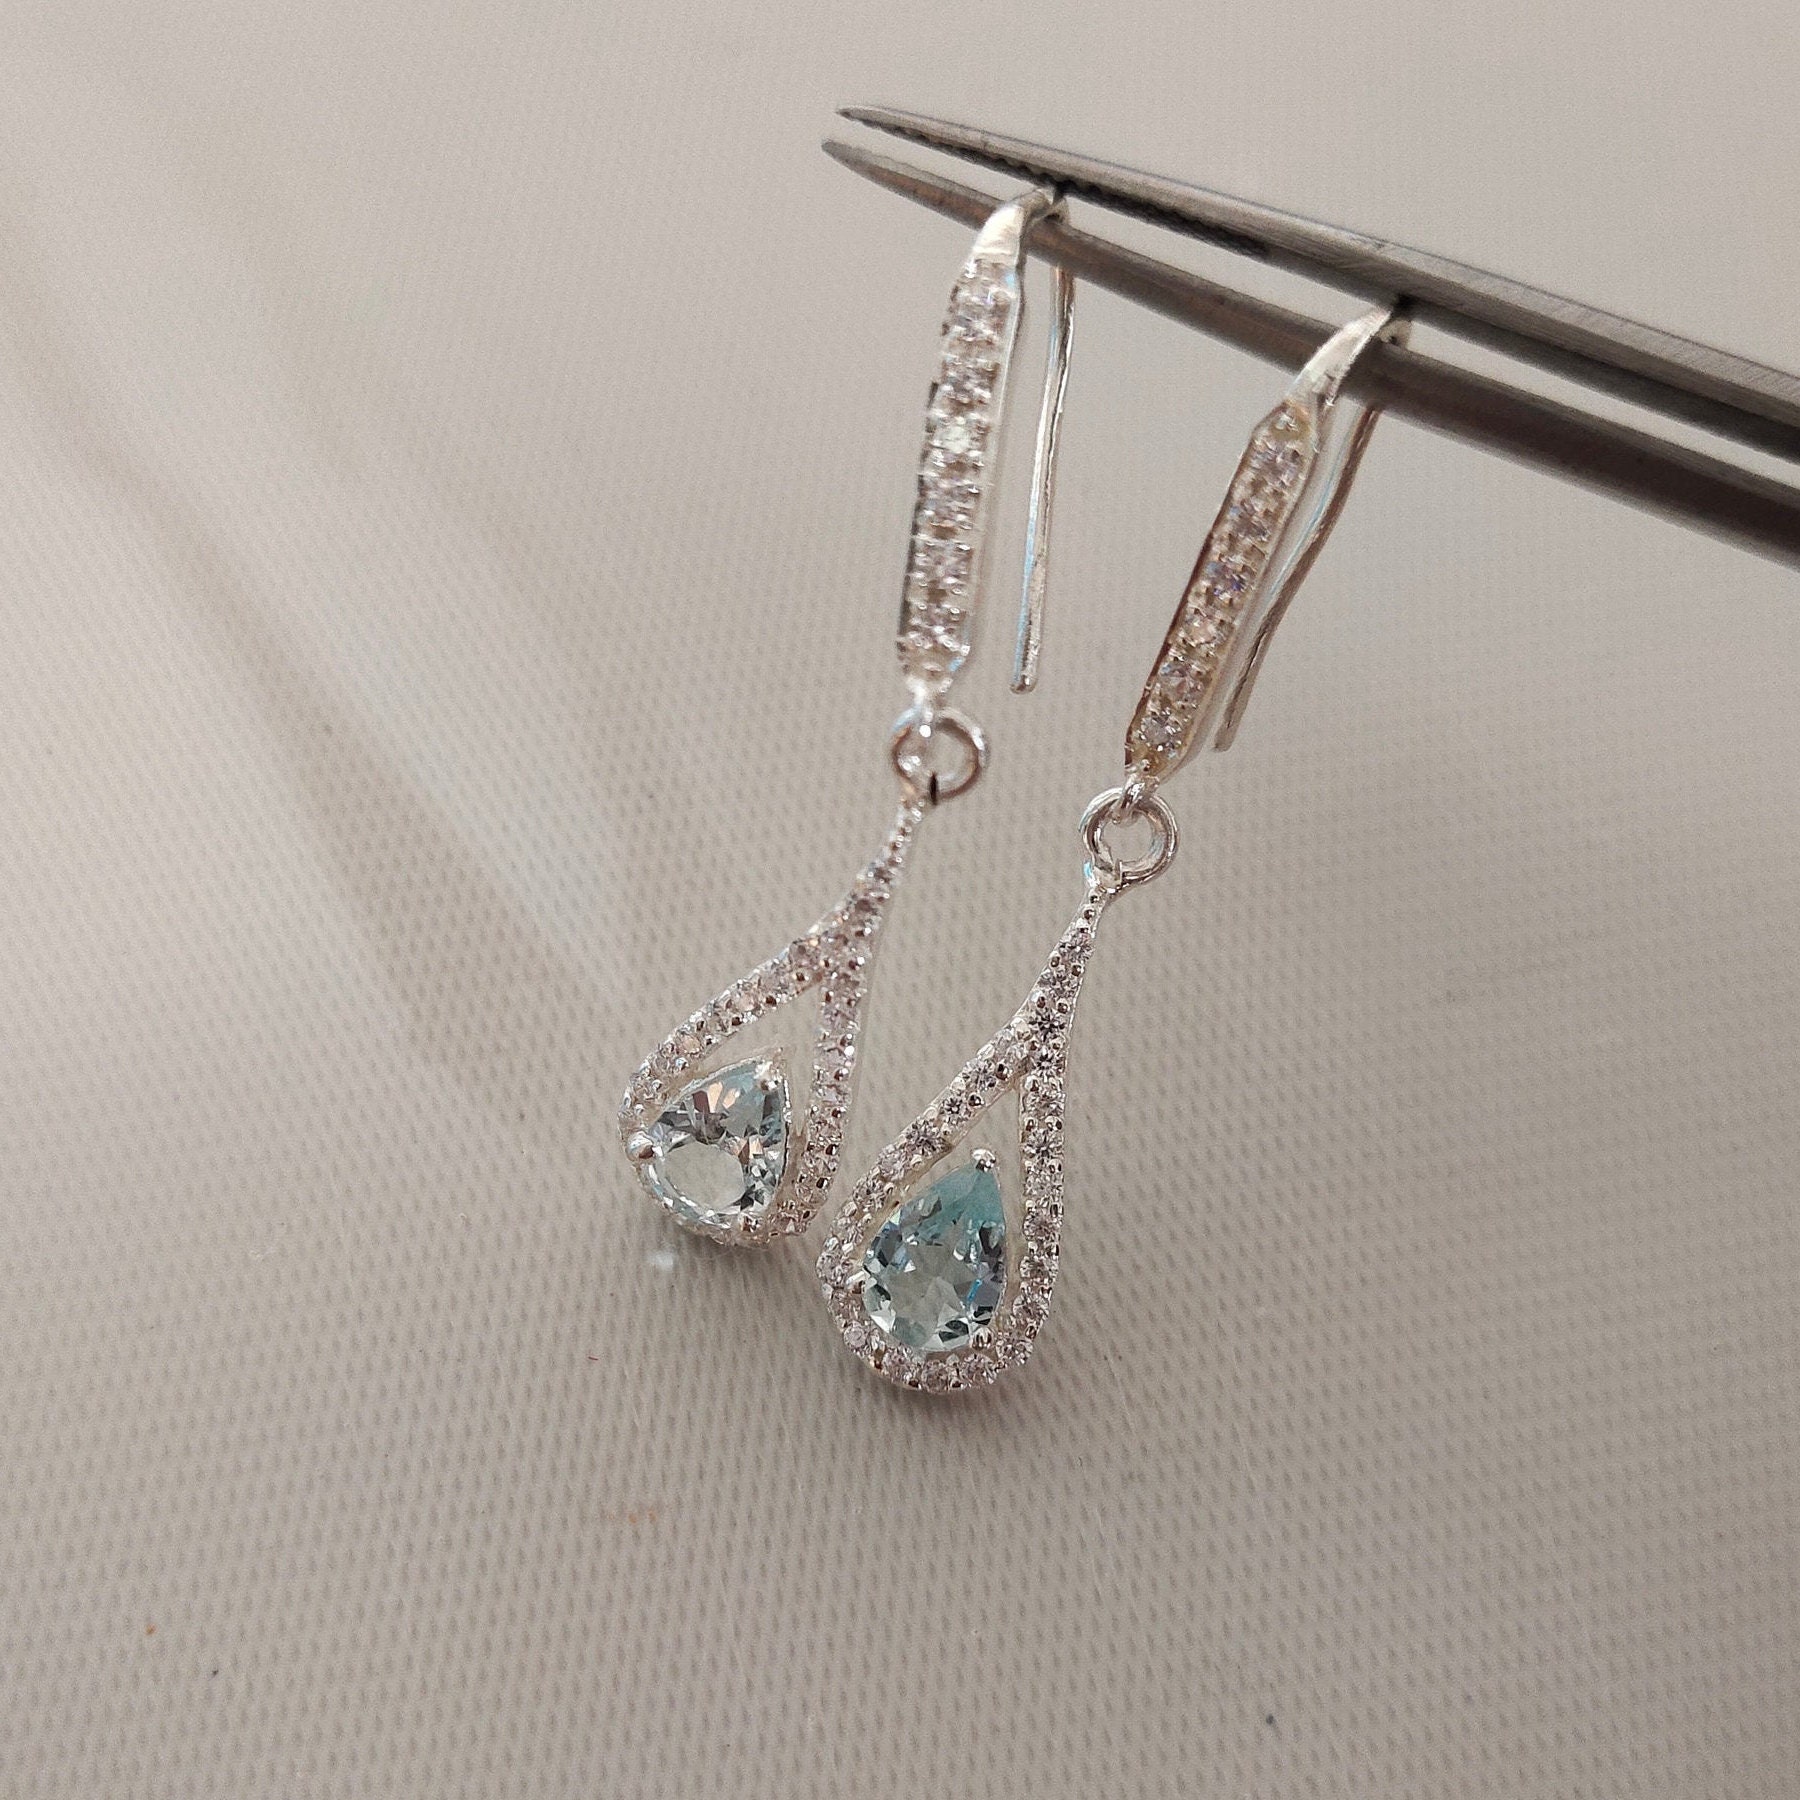 Aquamarine Earrings 925 sterling silver earrings aquamarine | Etsy